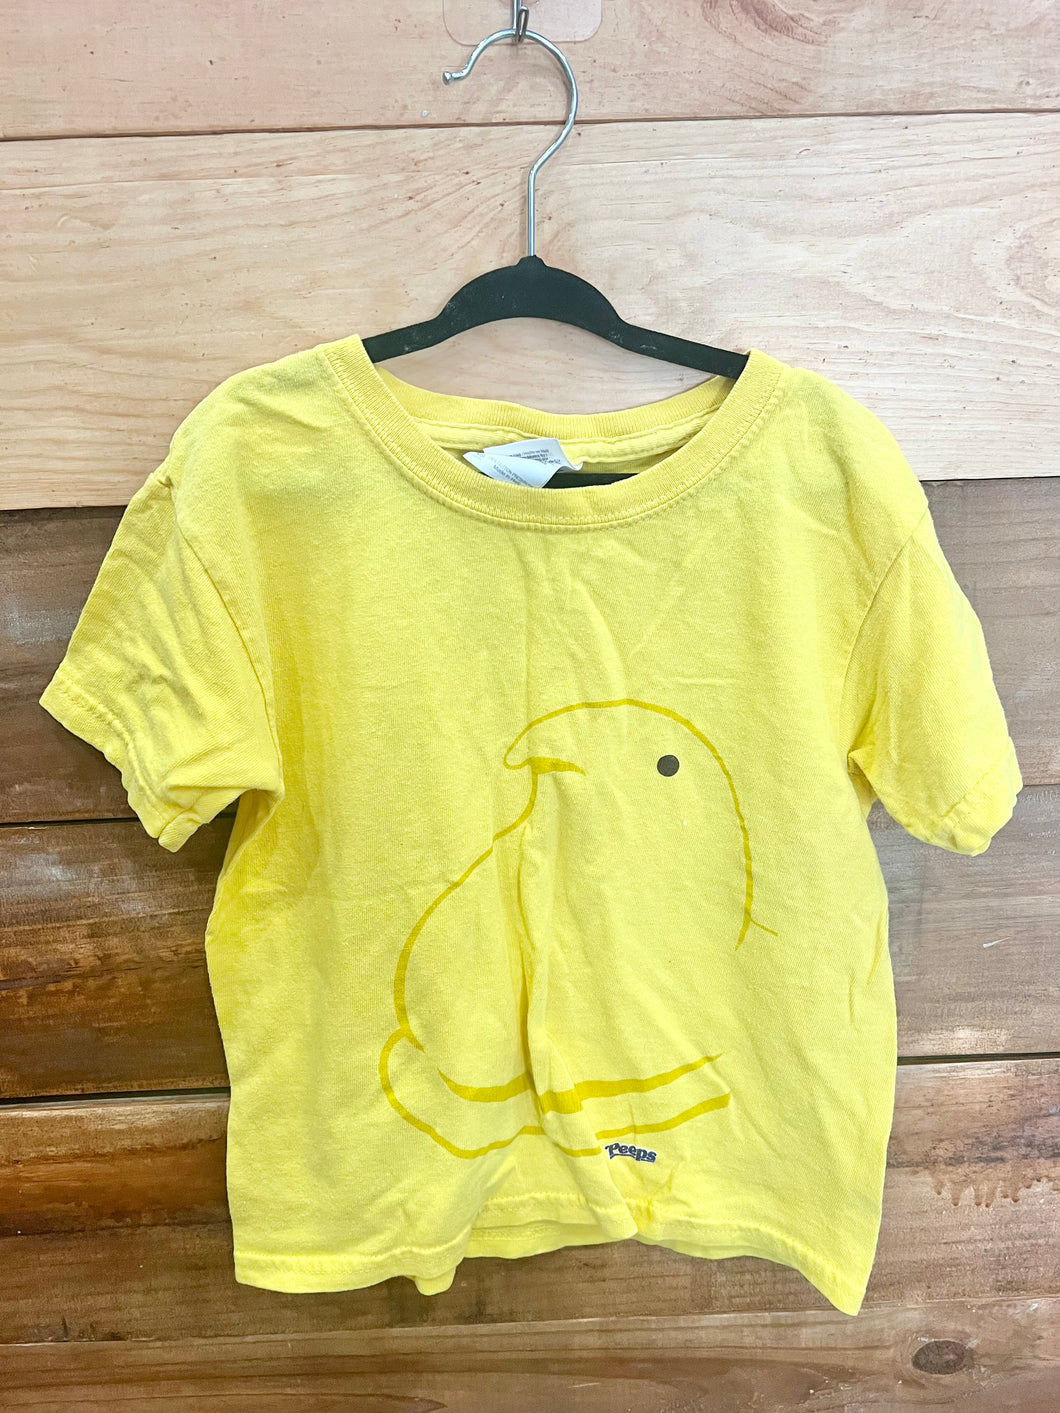 Peeps Yellow Shirt Size 4-5